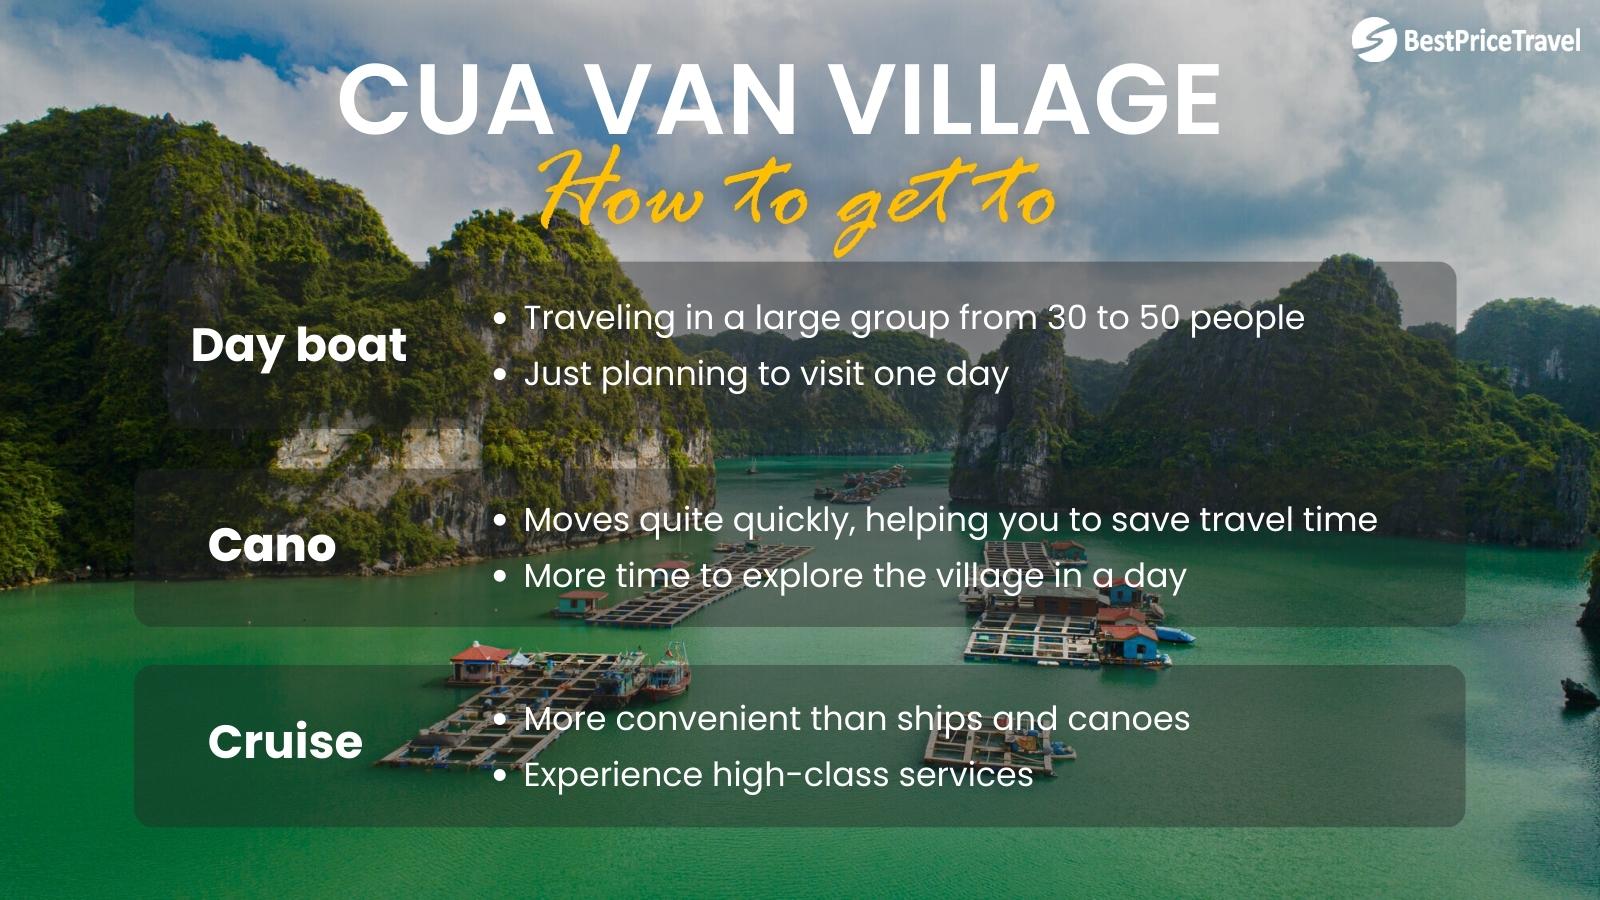 Way To Get To Cua Van Village